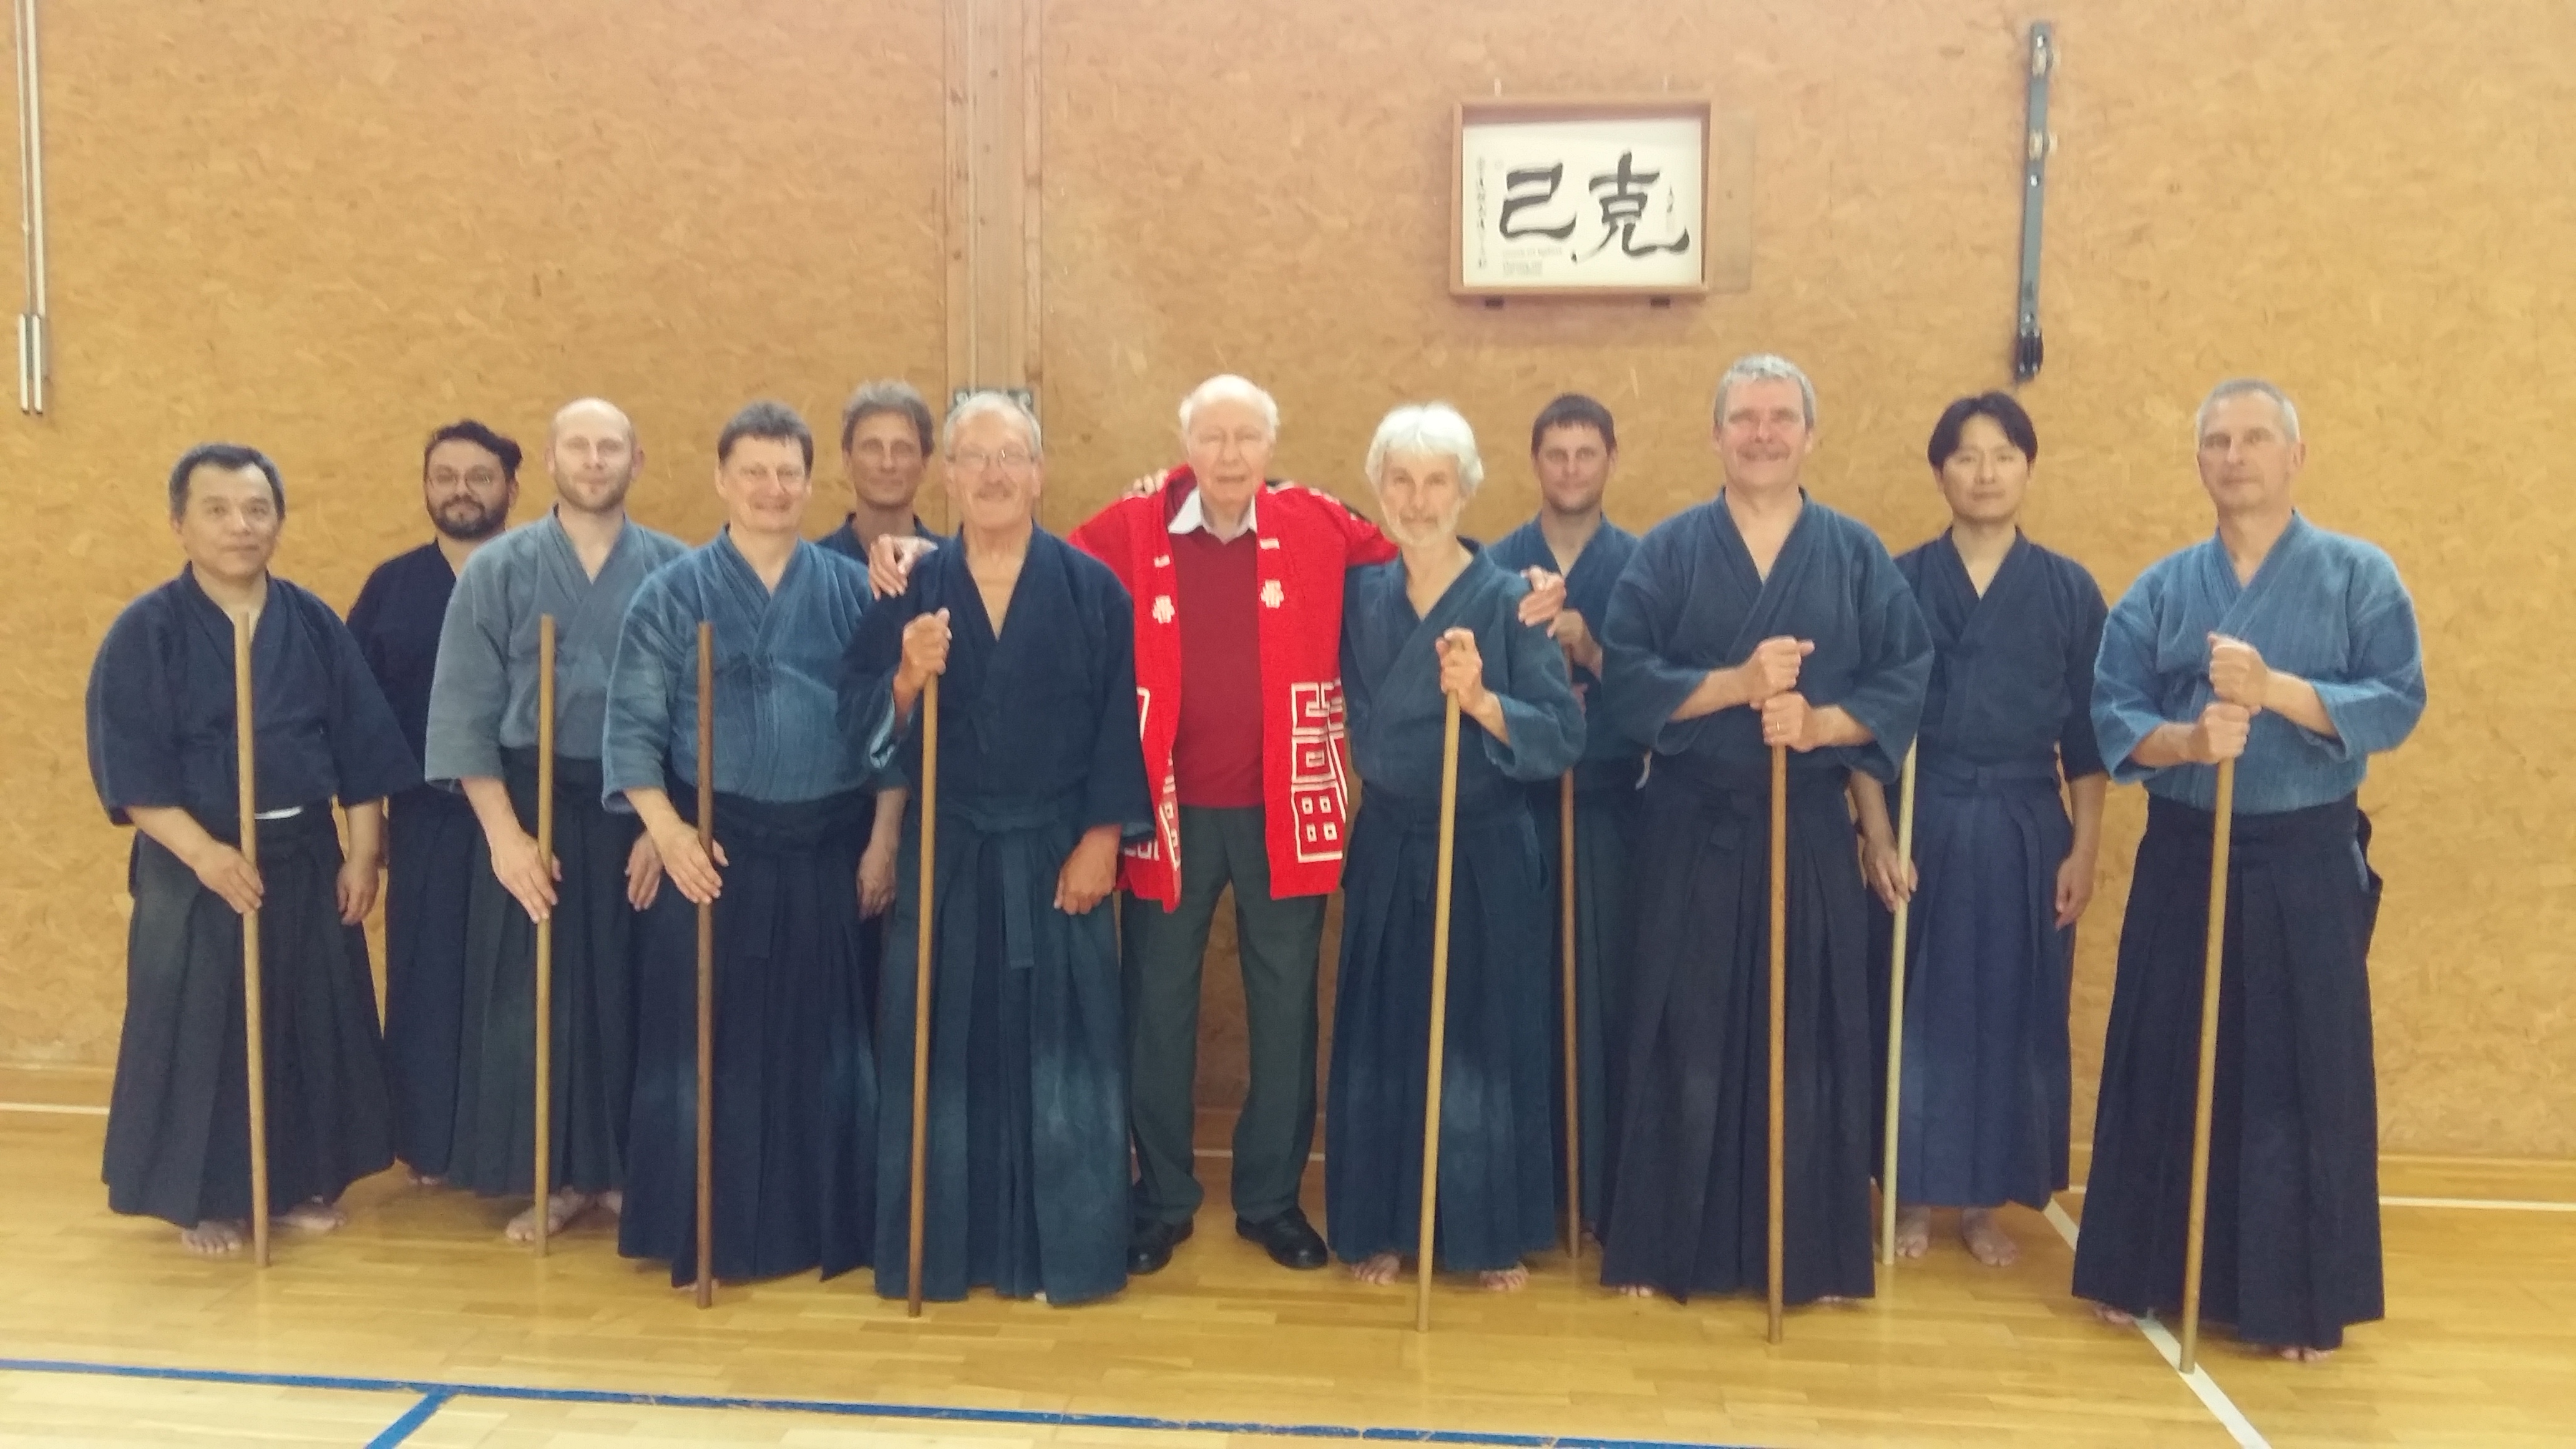 George visiting shinto muso ryu practice in Geneva